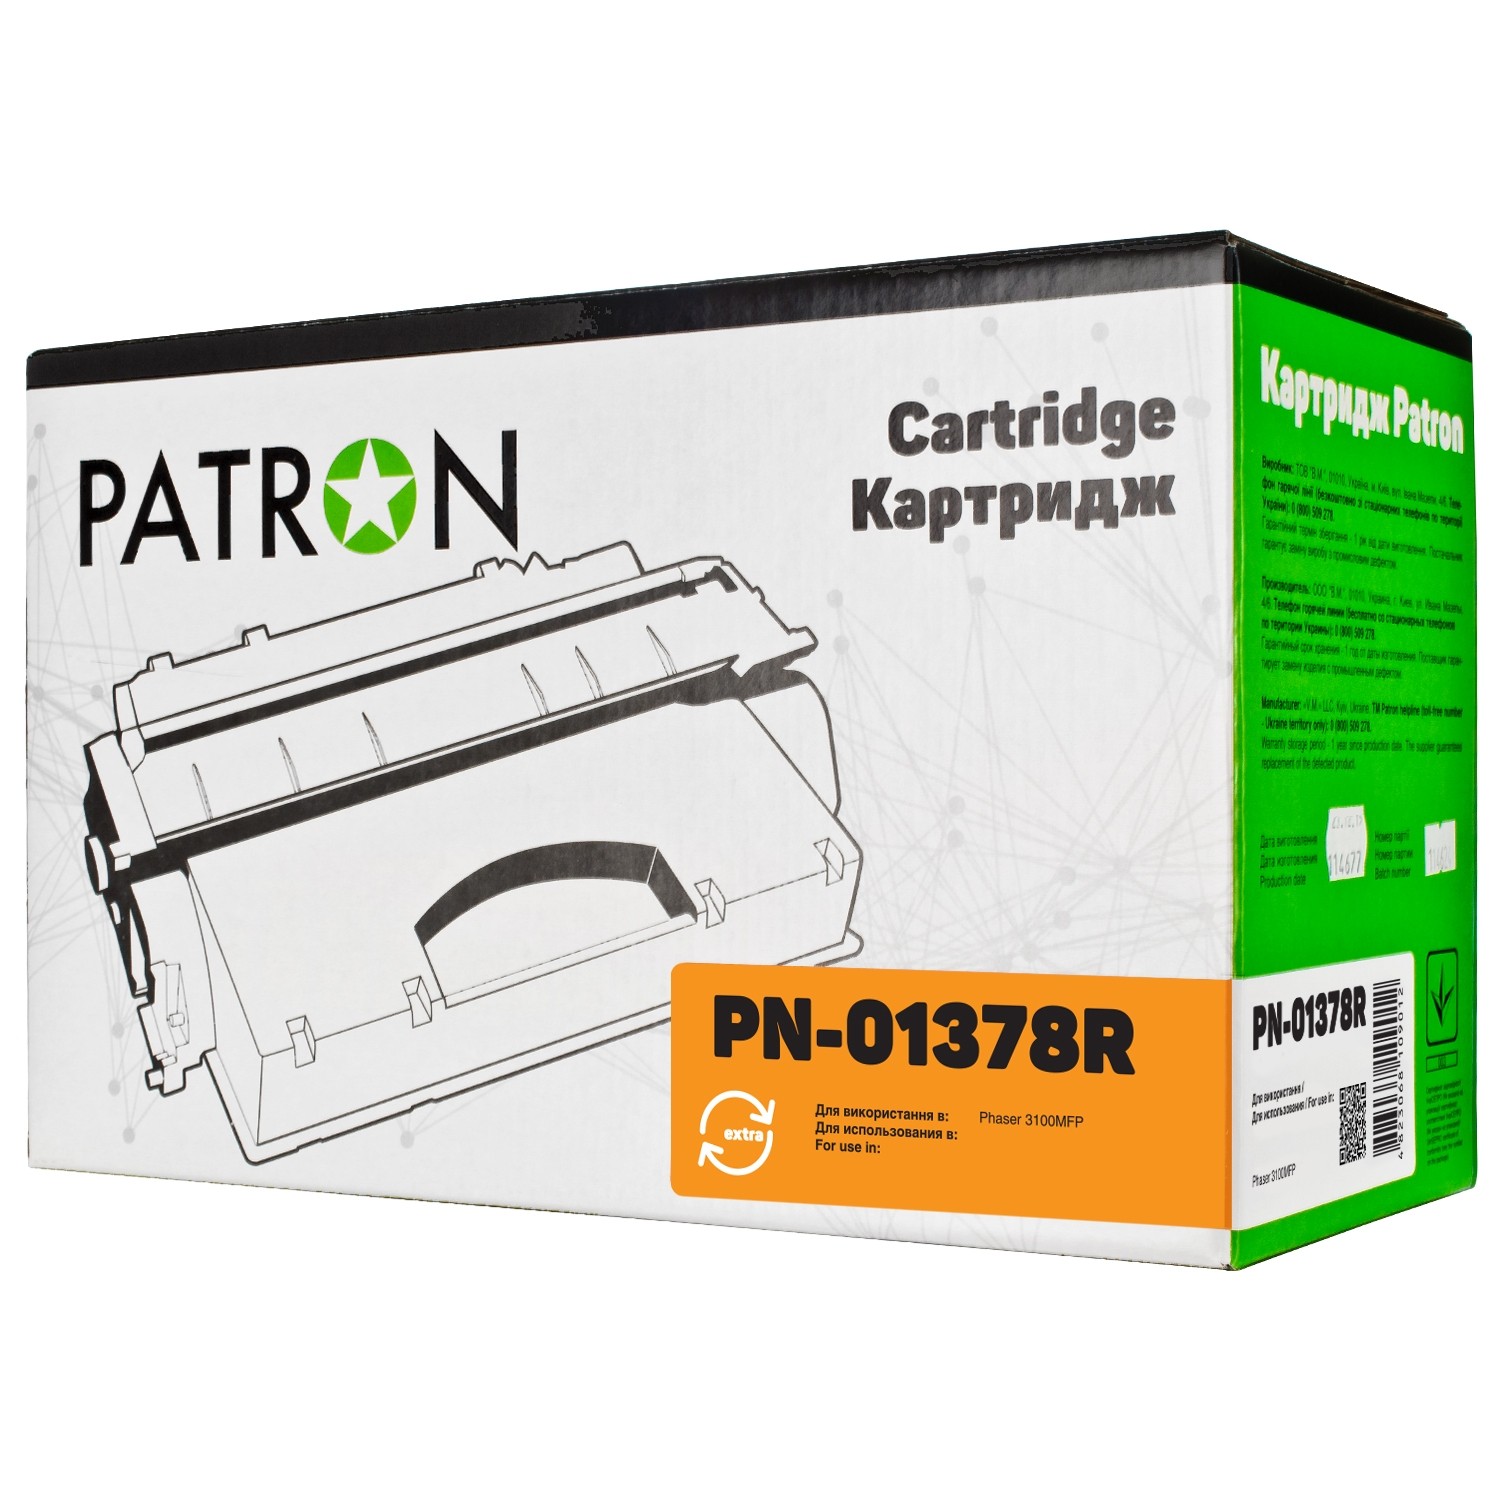 КАРТРИДЖ XEROX 106R01378 (PN-01378R) (Phaser 3100MFP) PATRON Extra  